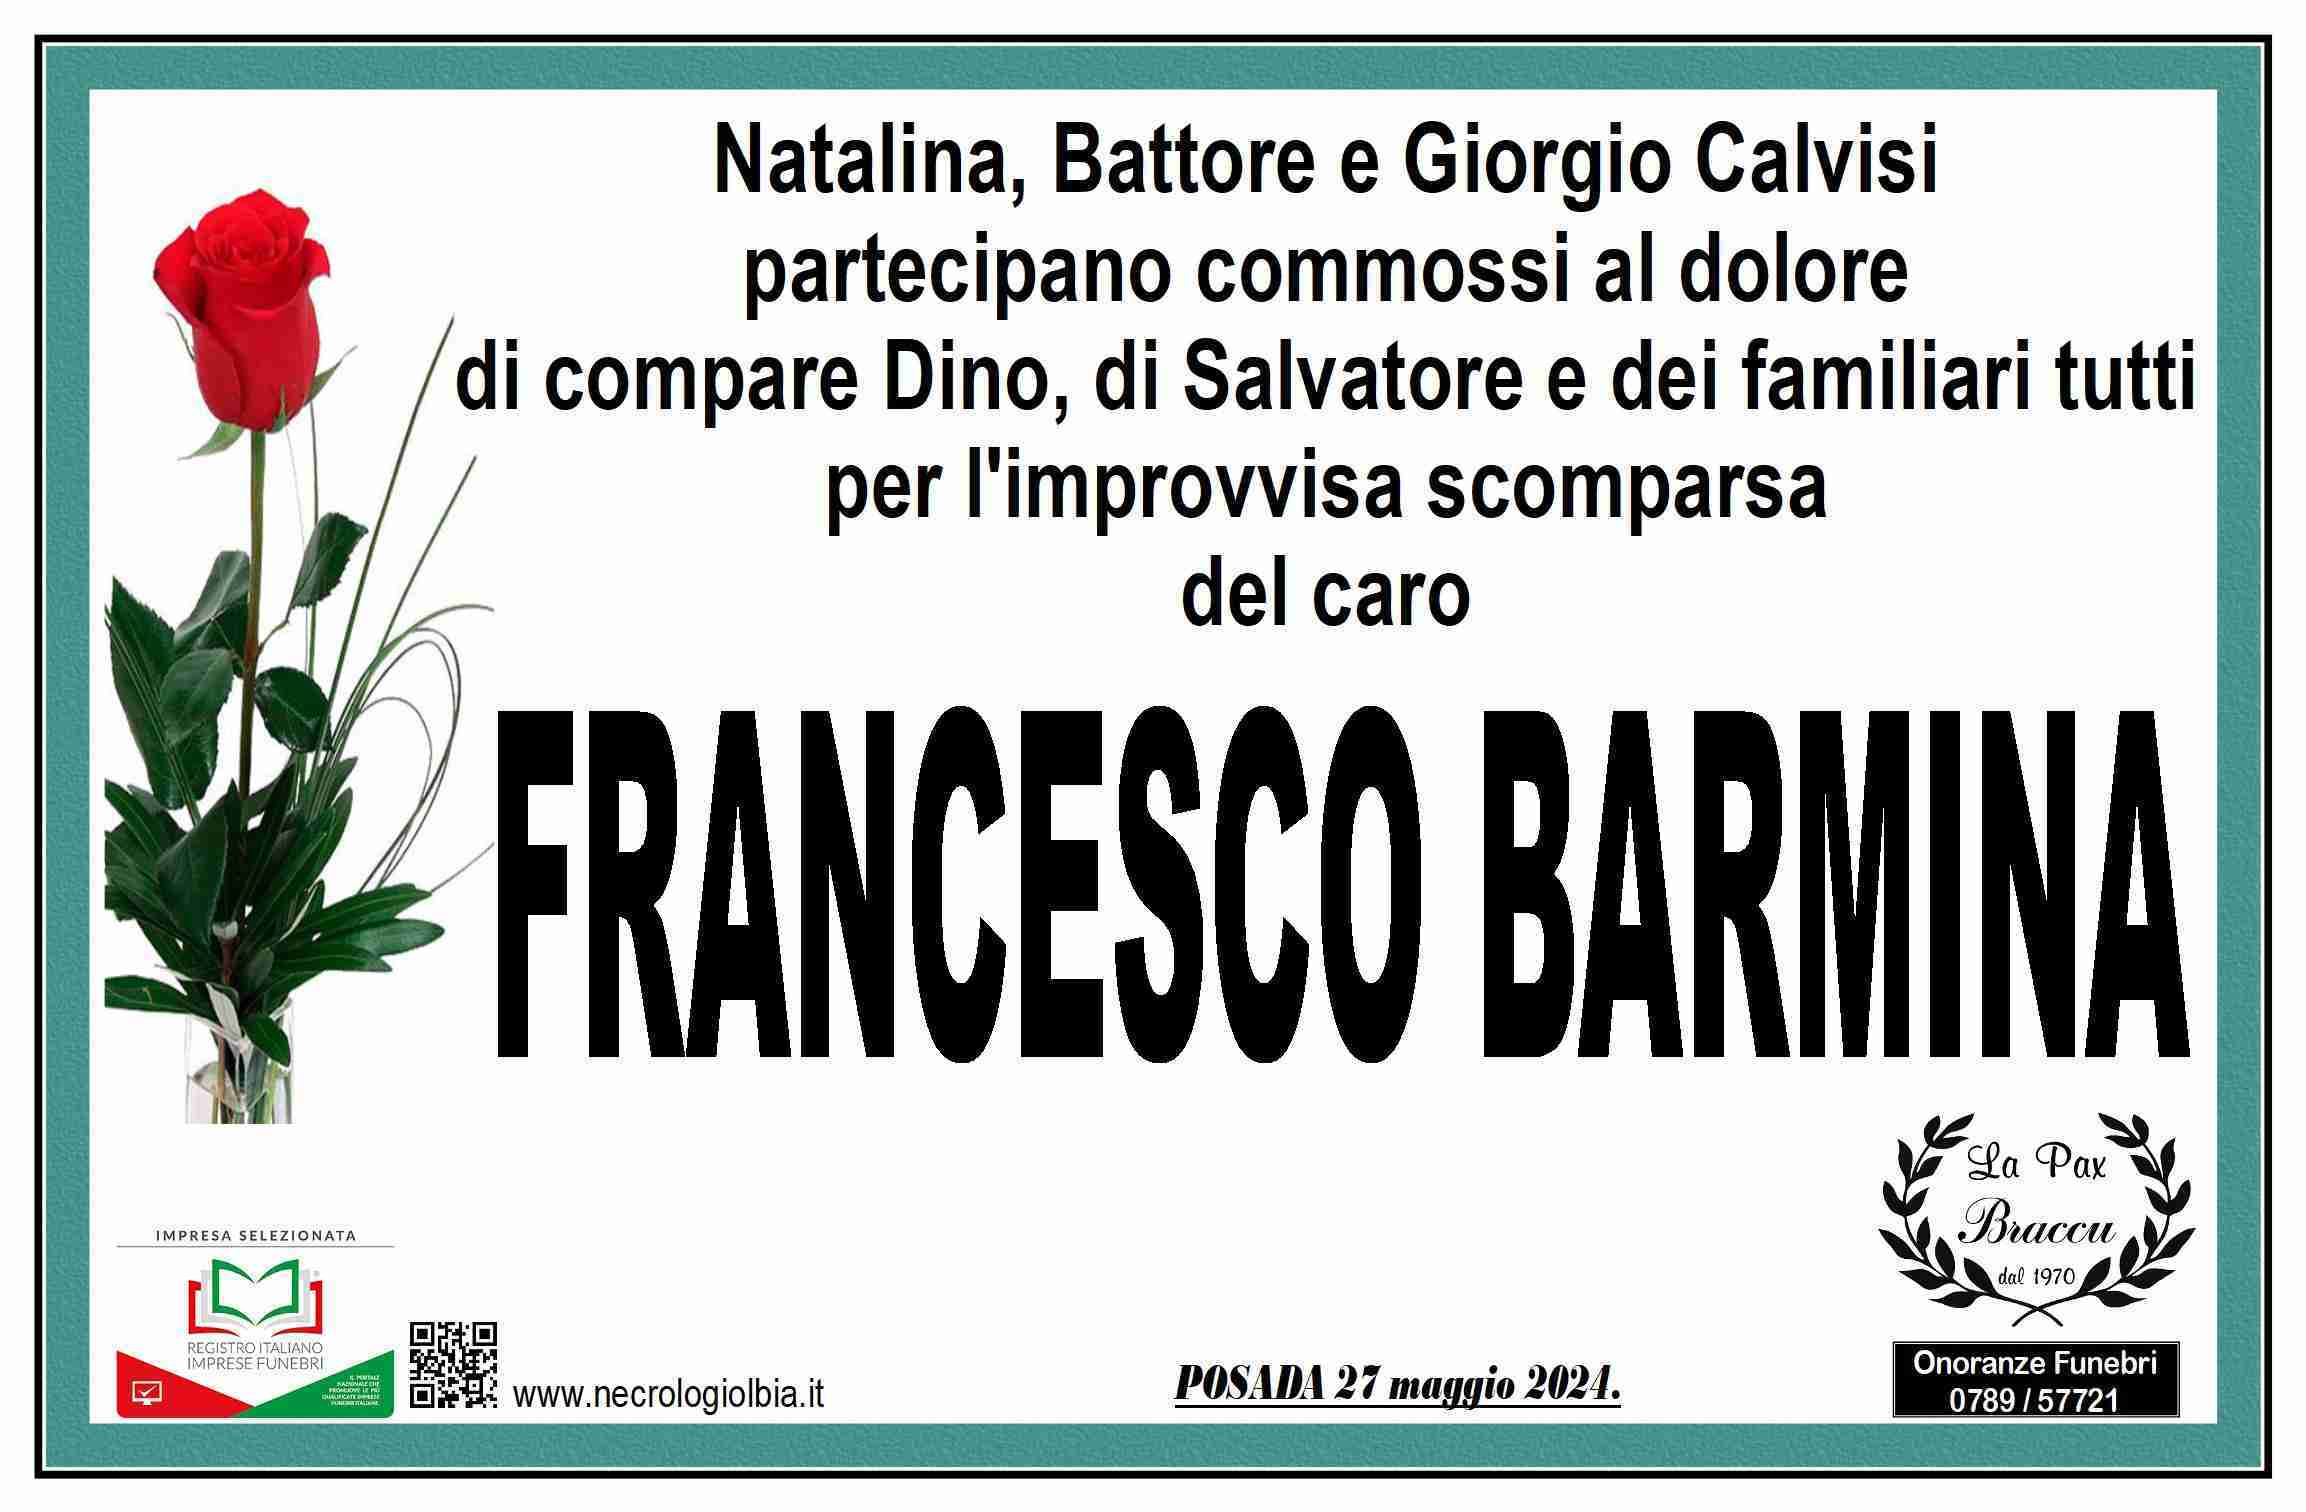 Francesco Barmina